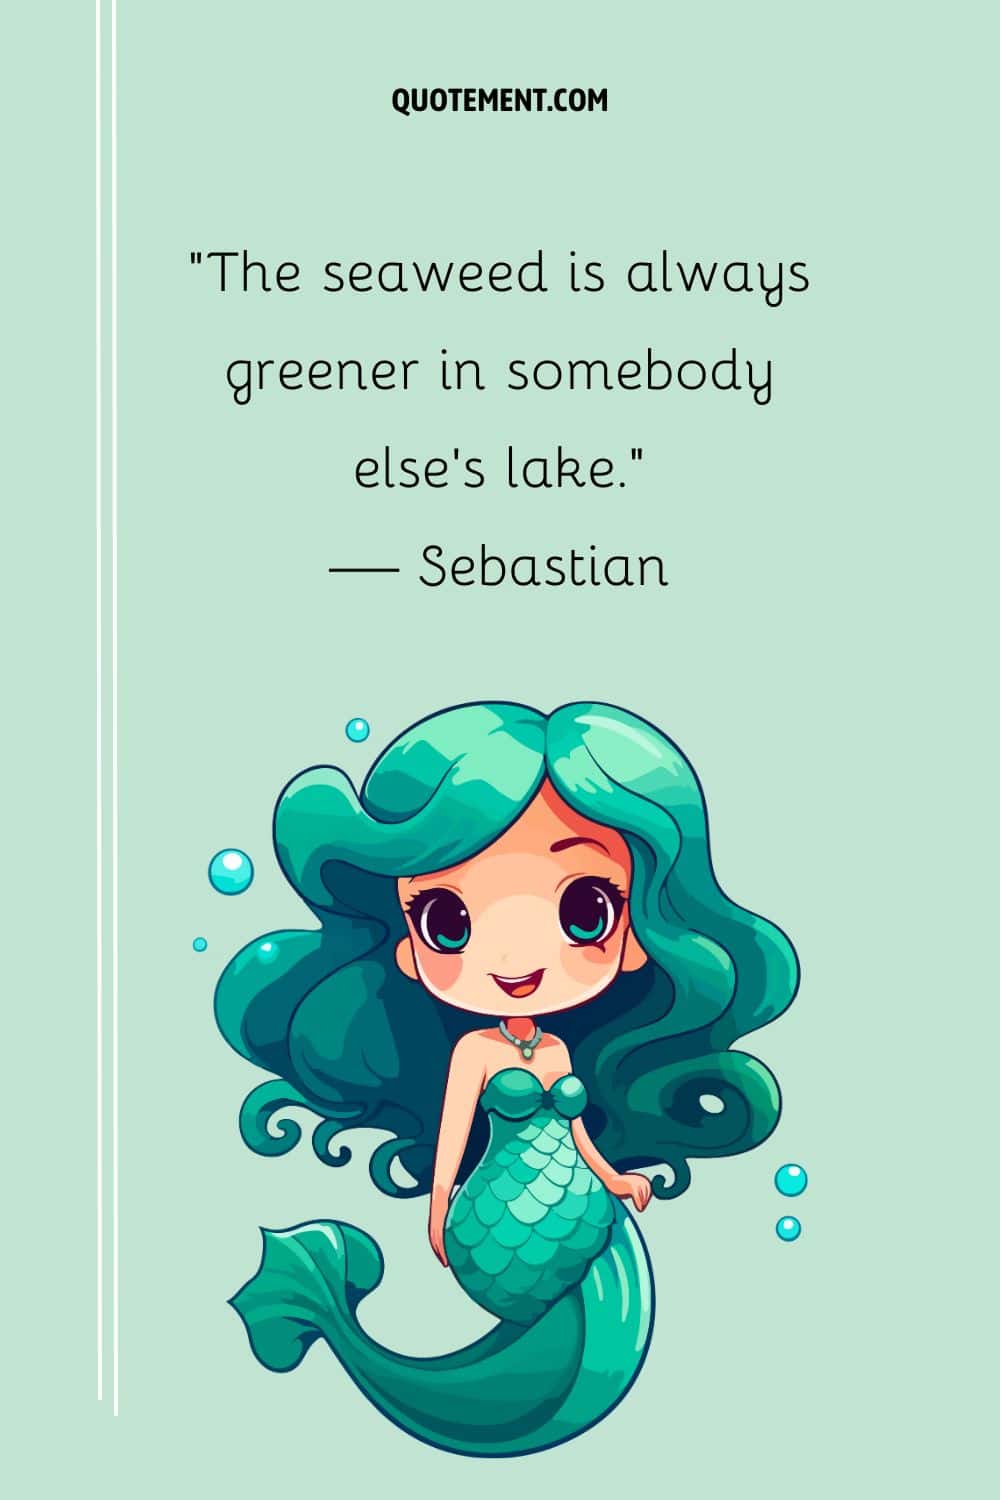 Little mermaid's joy shines beneath waves.